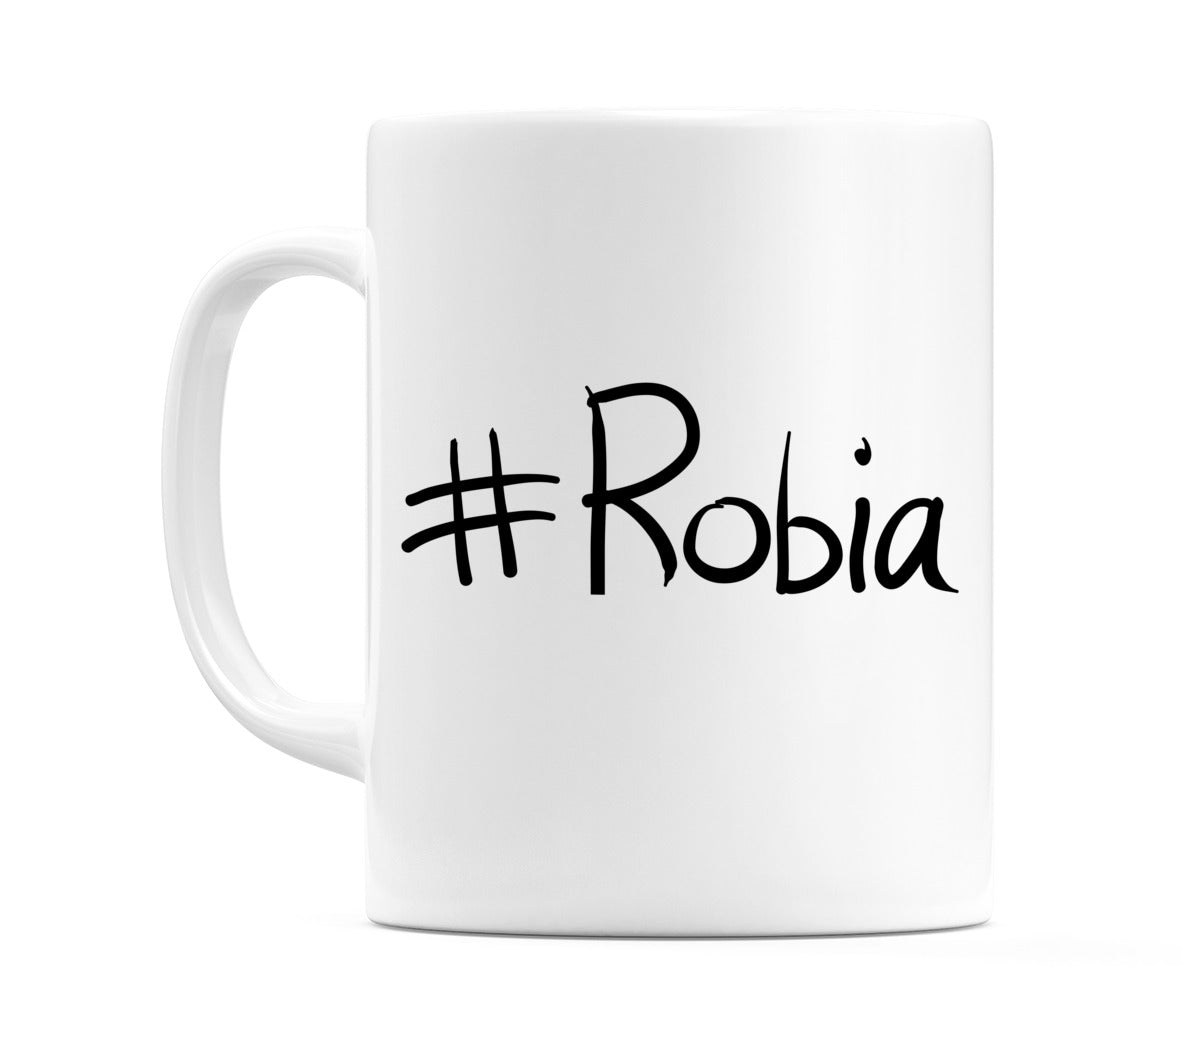 robia-mug-wedomugs-reviews-on-judge-me